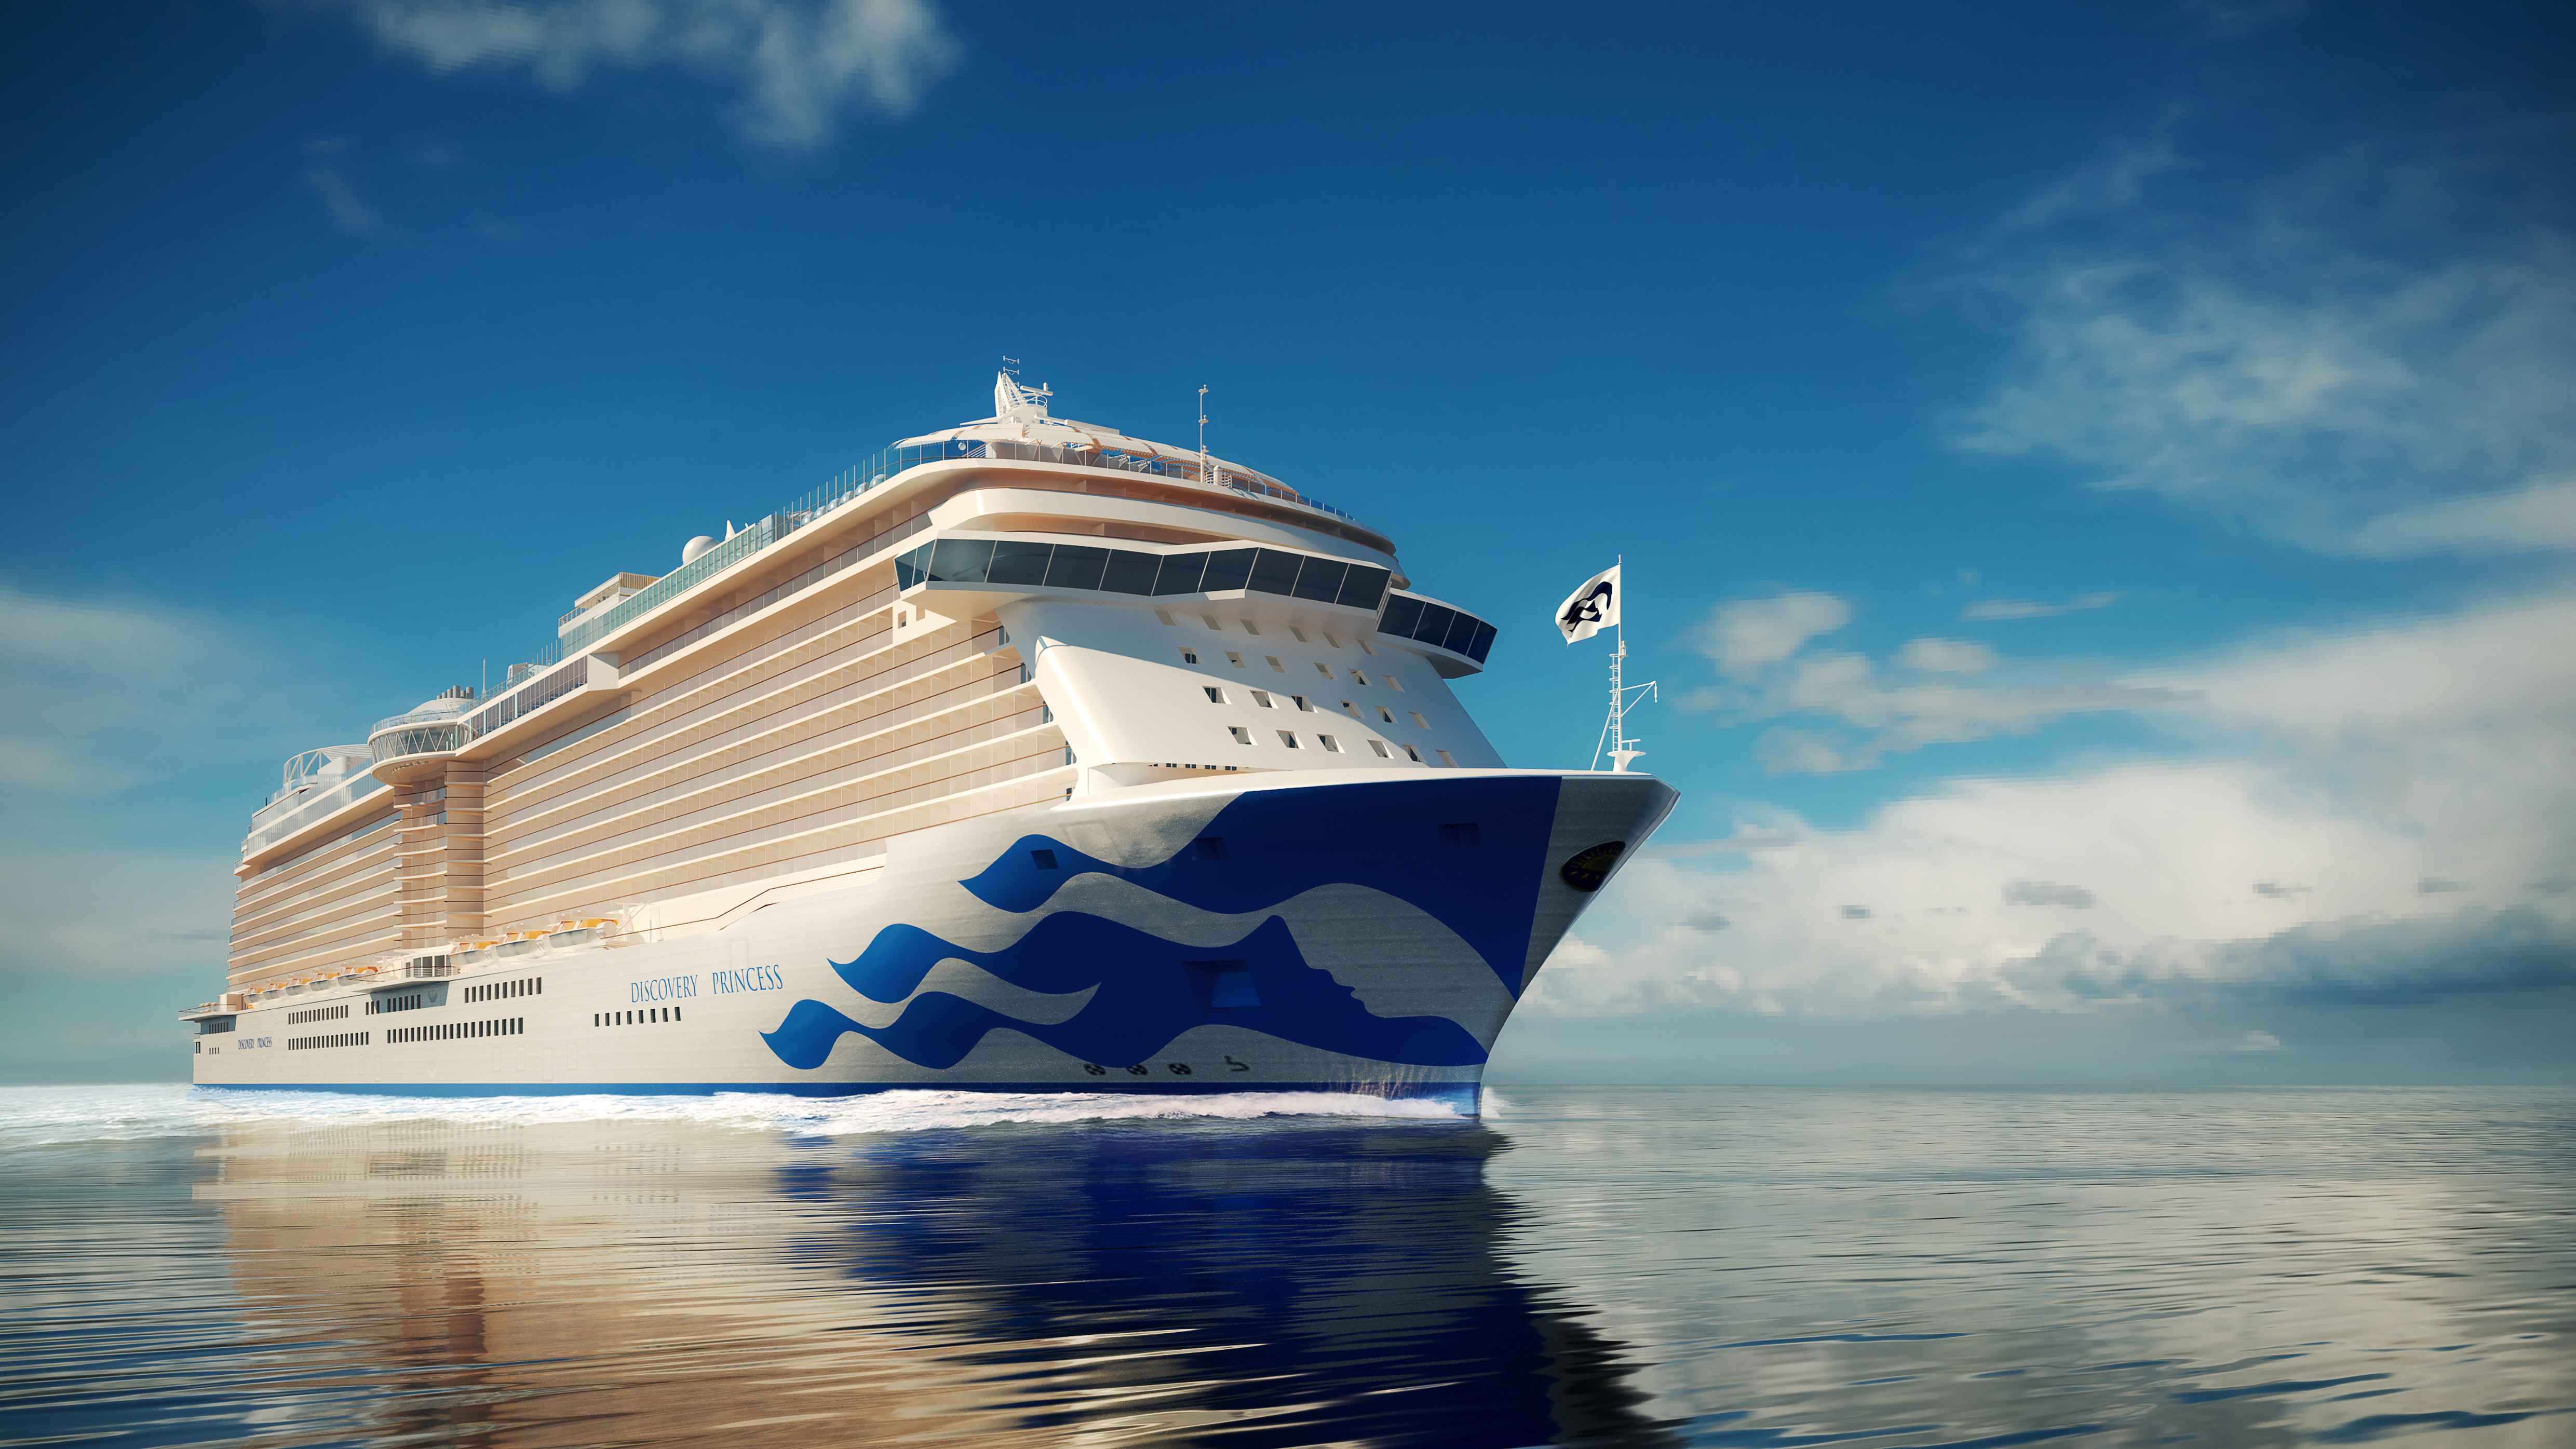 new princess cruise ship 2022